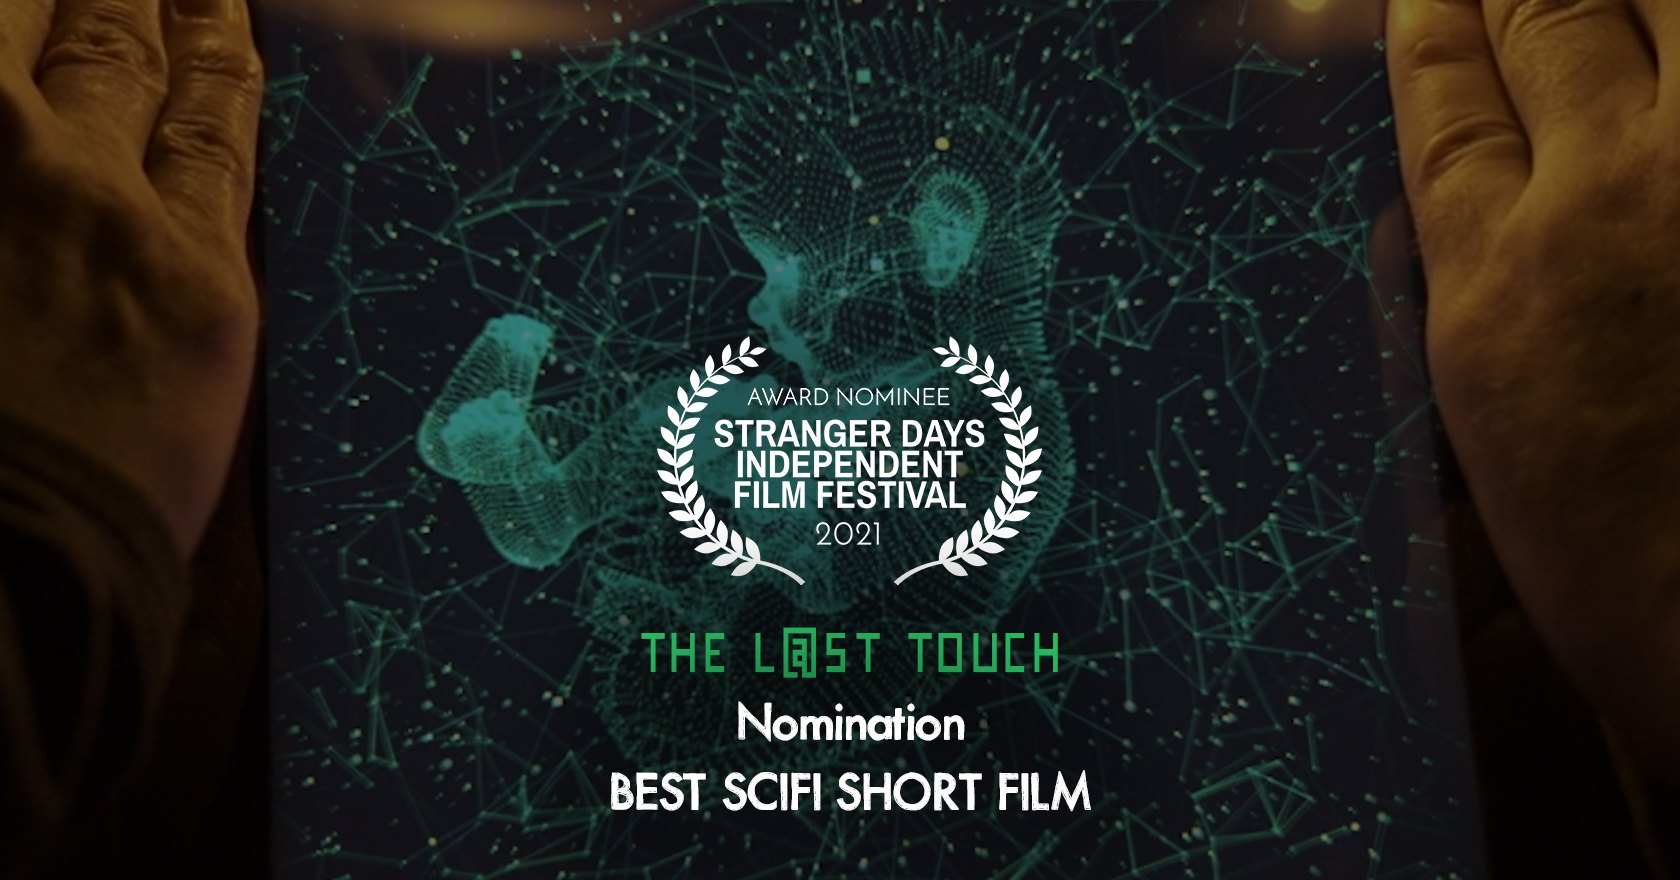 Award Nominee @ Stranger Days Independent Film Festival 2021